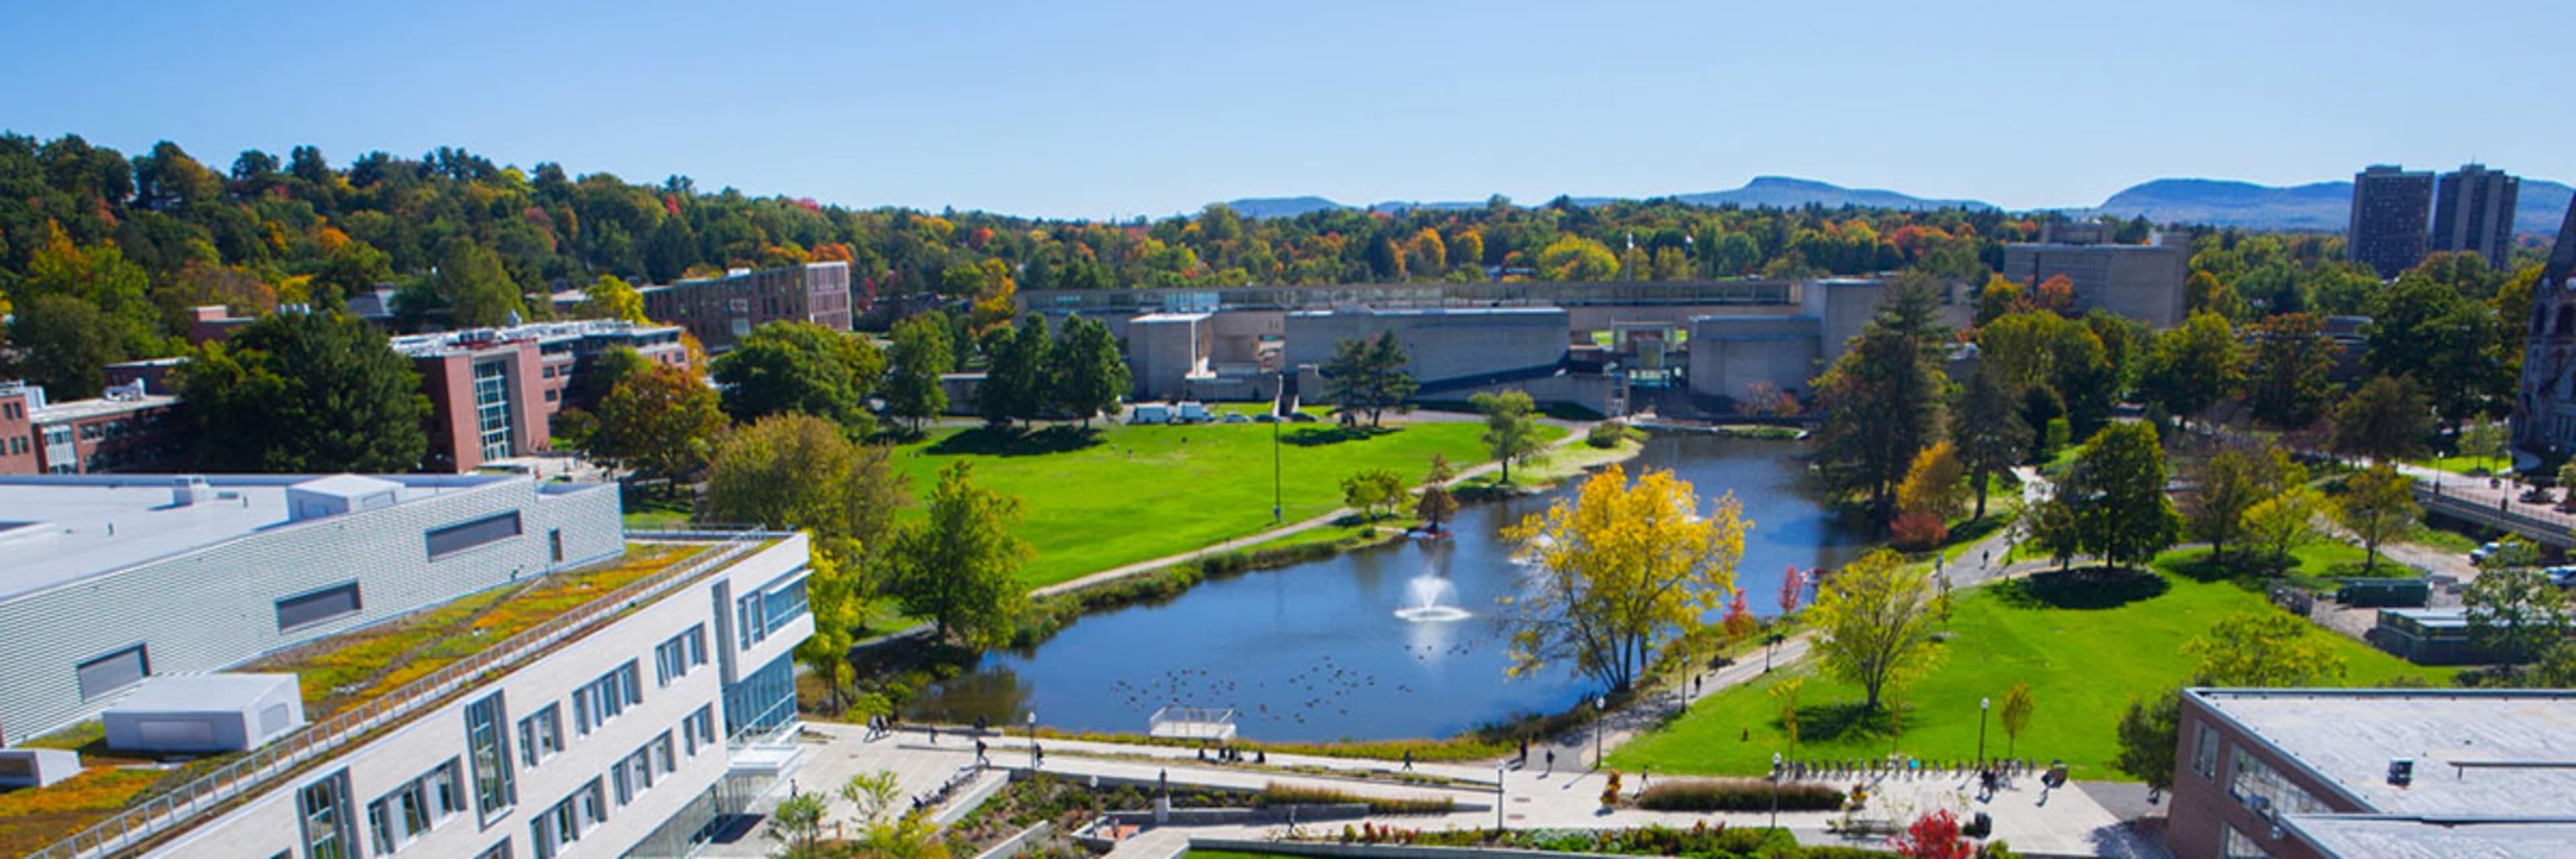 University of Massachusetts Amherst Campus